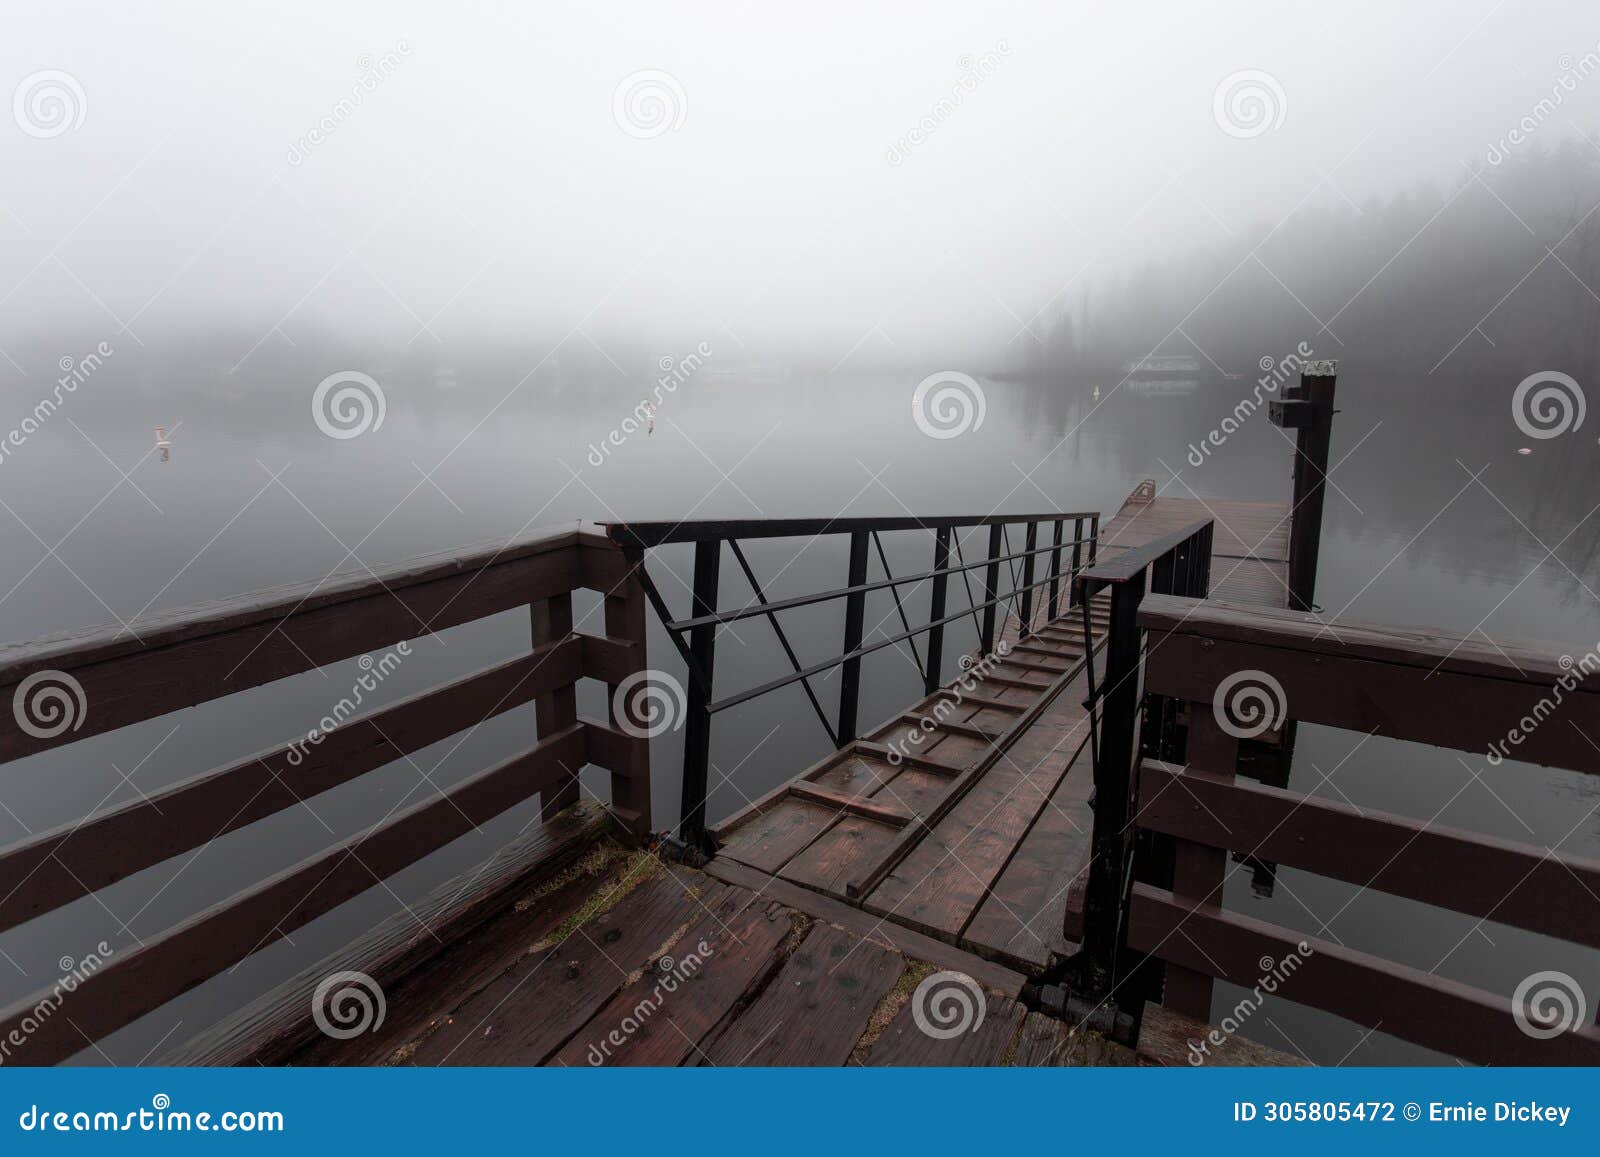 dark foggy and misty morning at shawnigan lake brish columbia